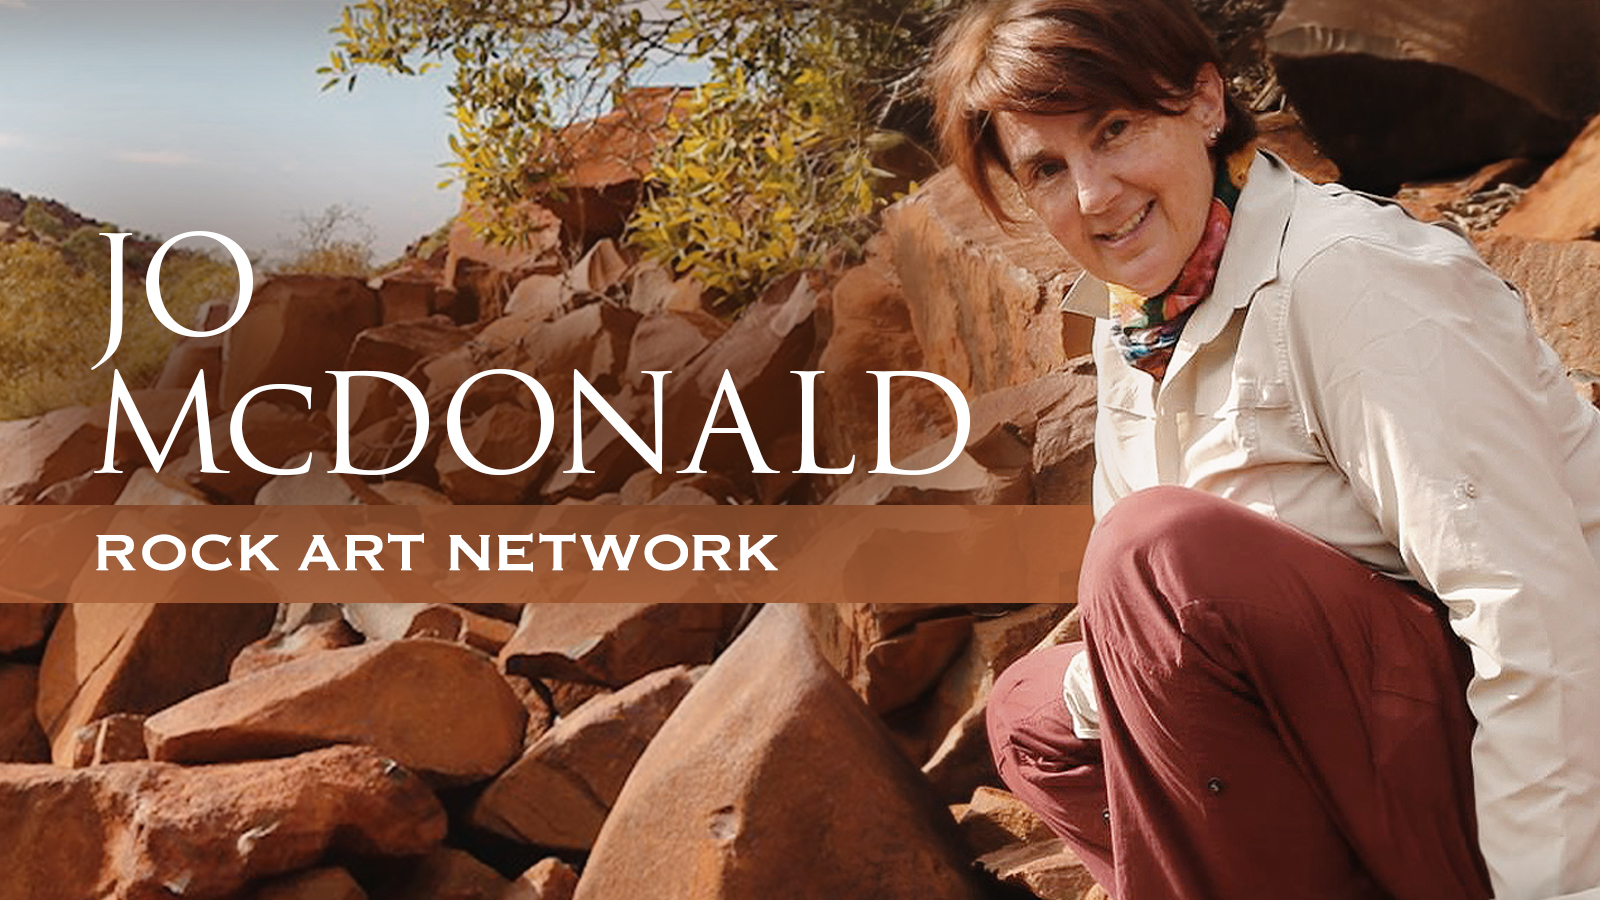 The Rock Art Network Jo McDonald